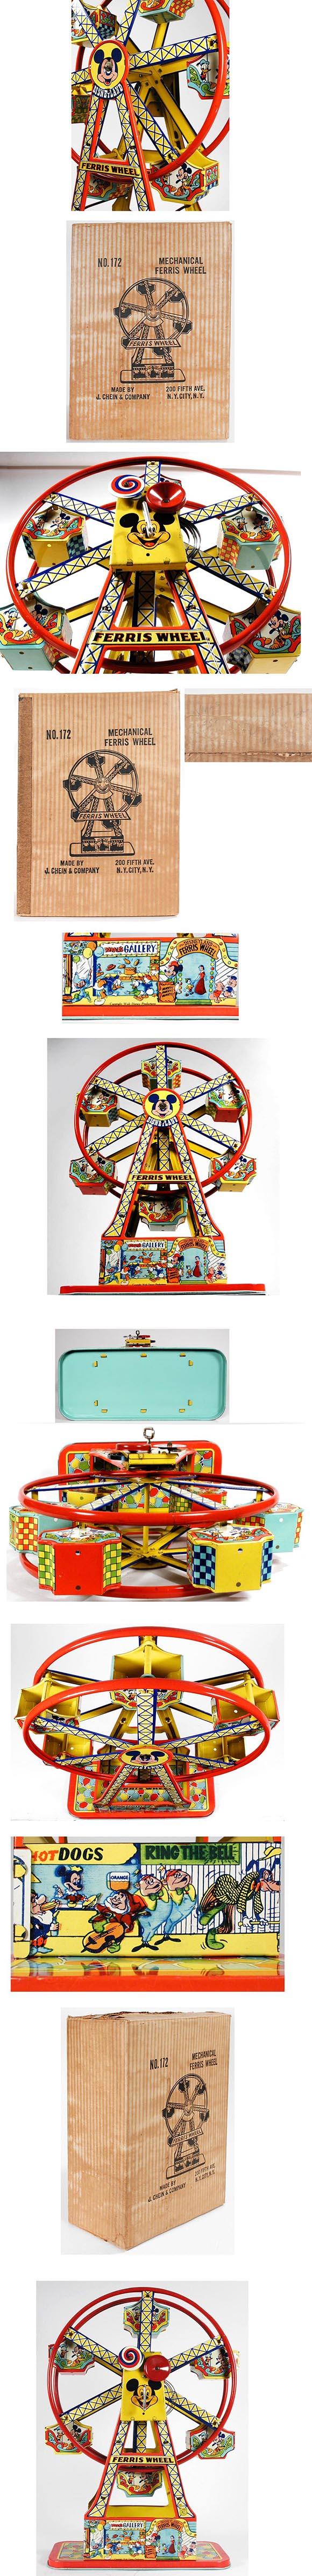 1952 Chein, No.172 Disneyland Mechanical Ferris Wheel in Original Box